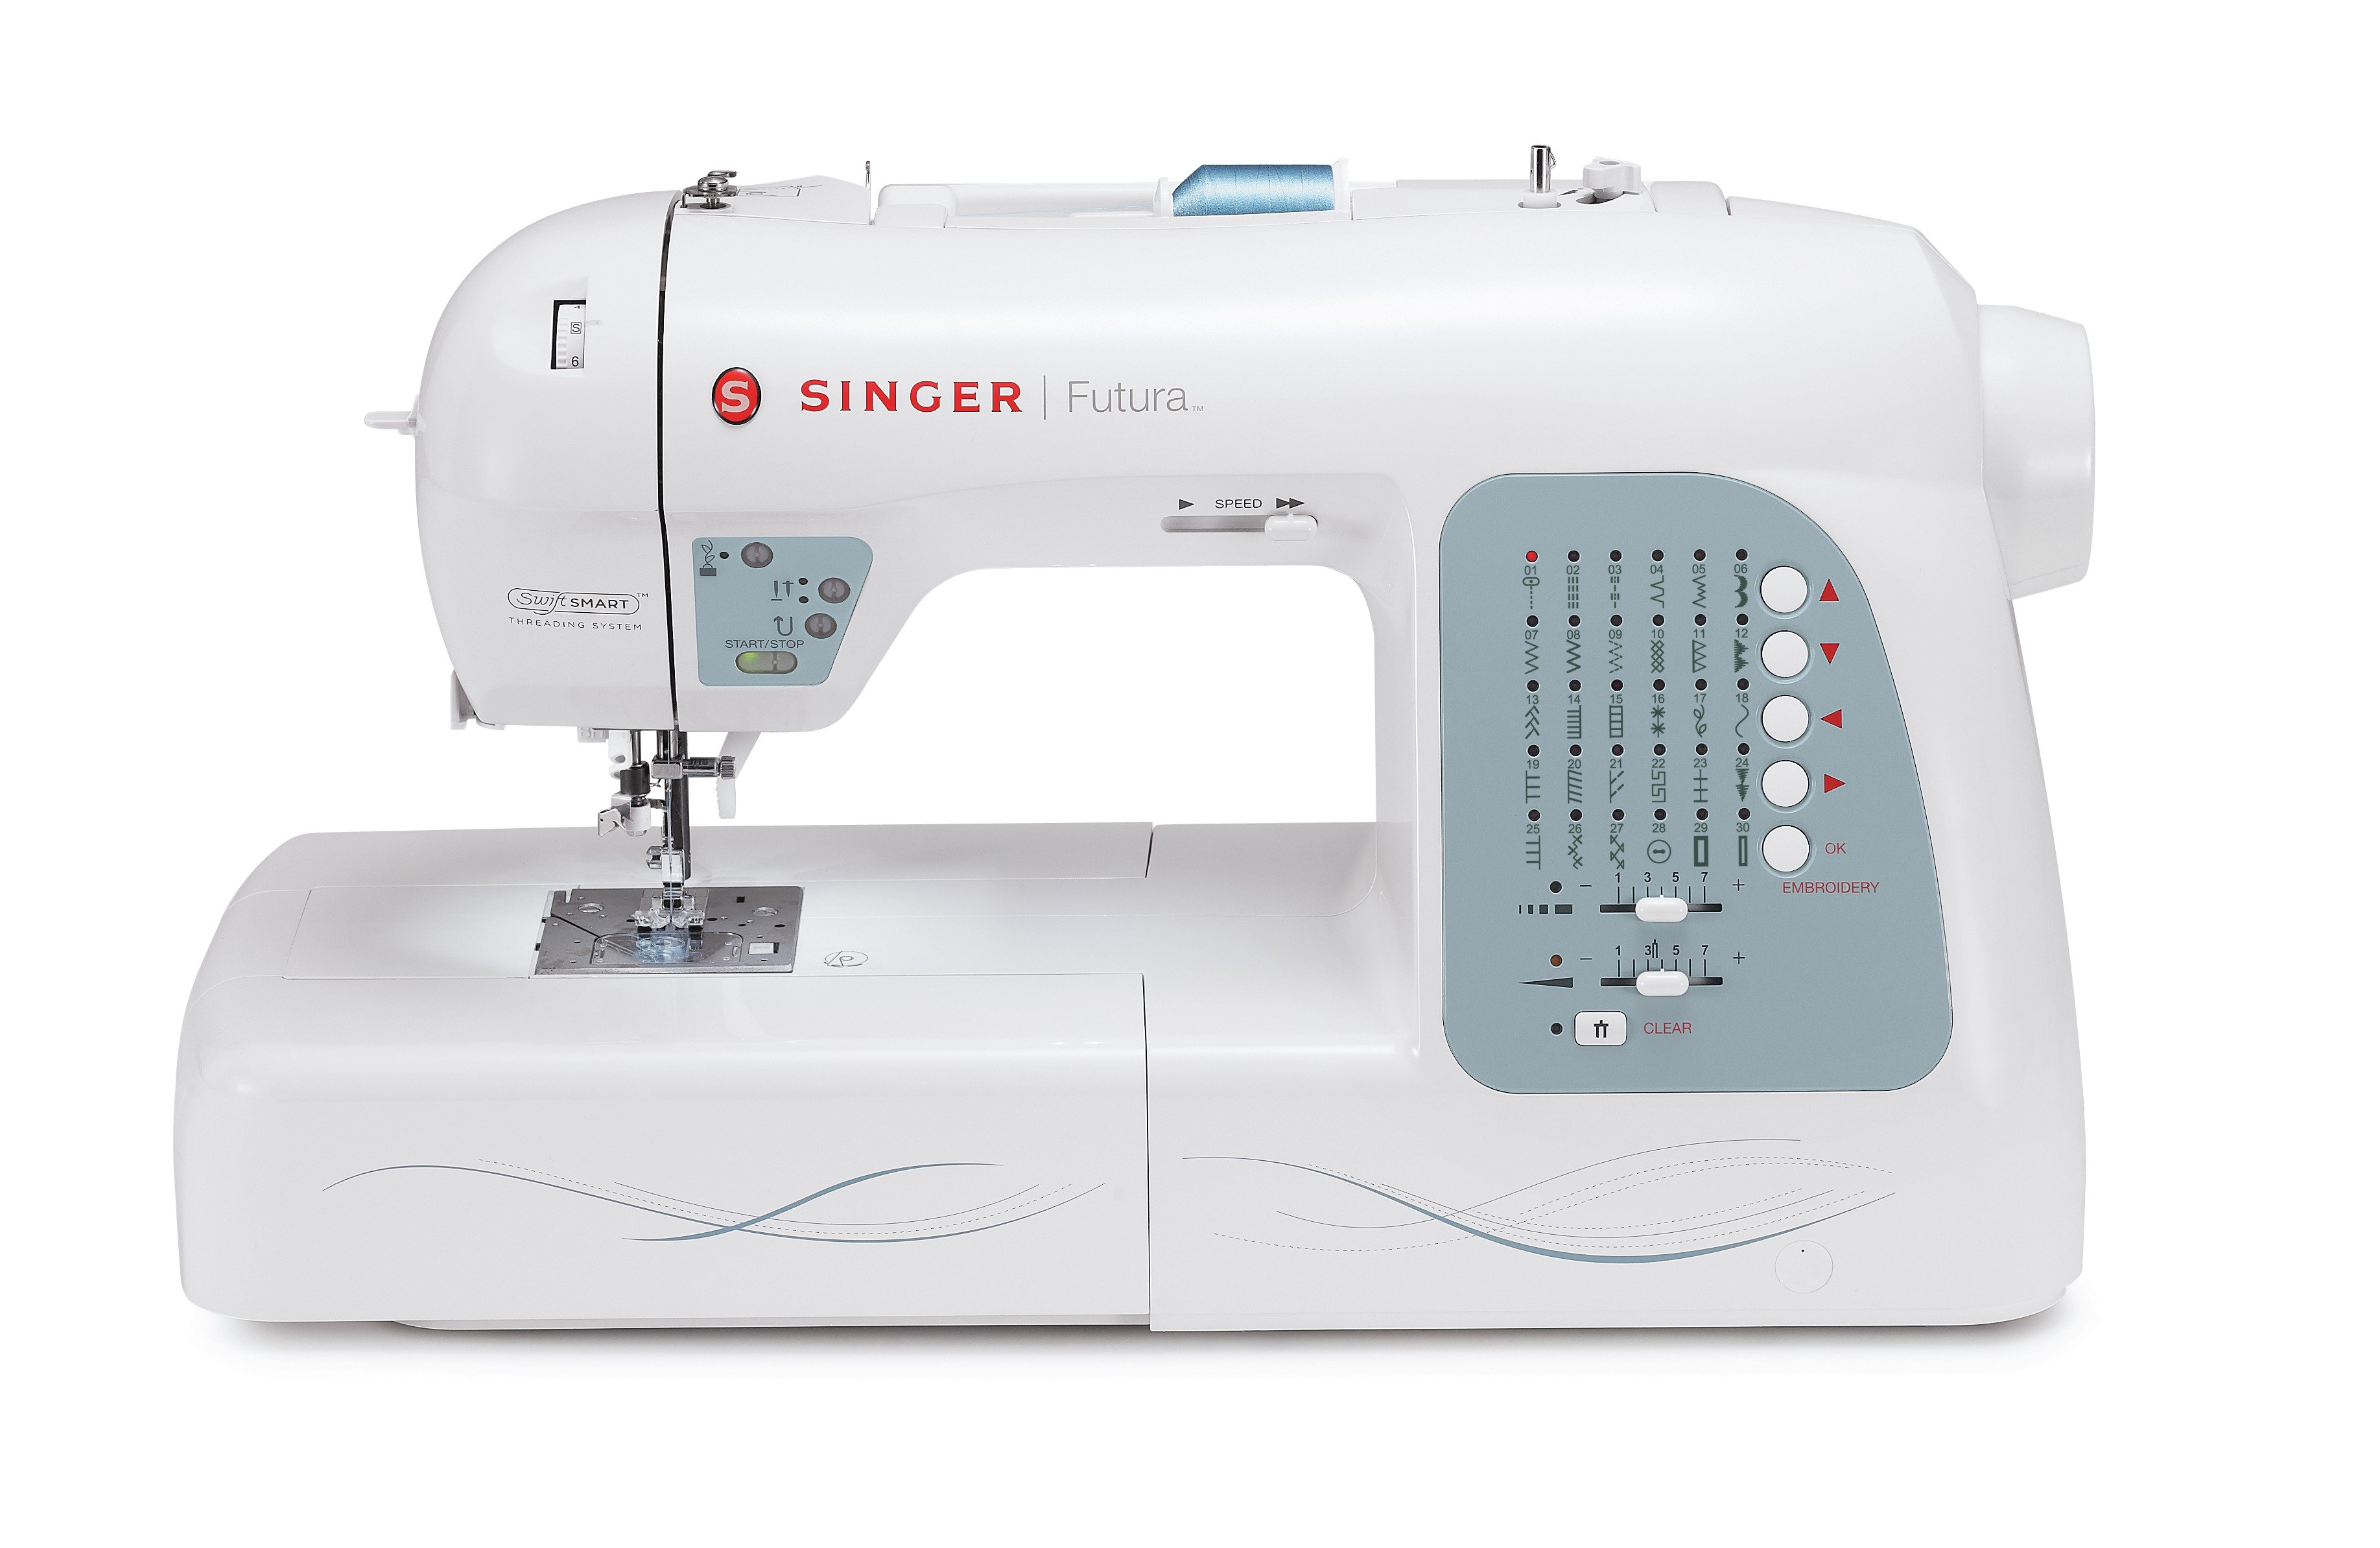 Singer XL400 Sewing Machine.